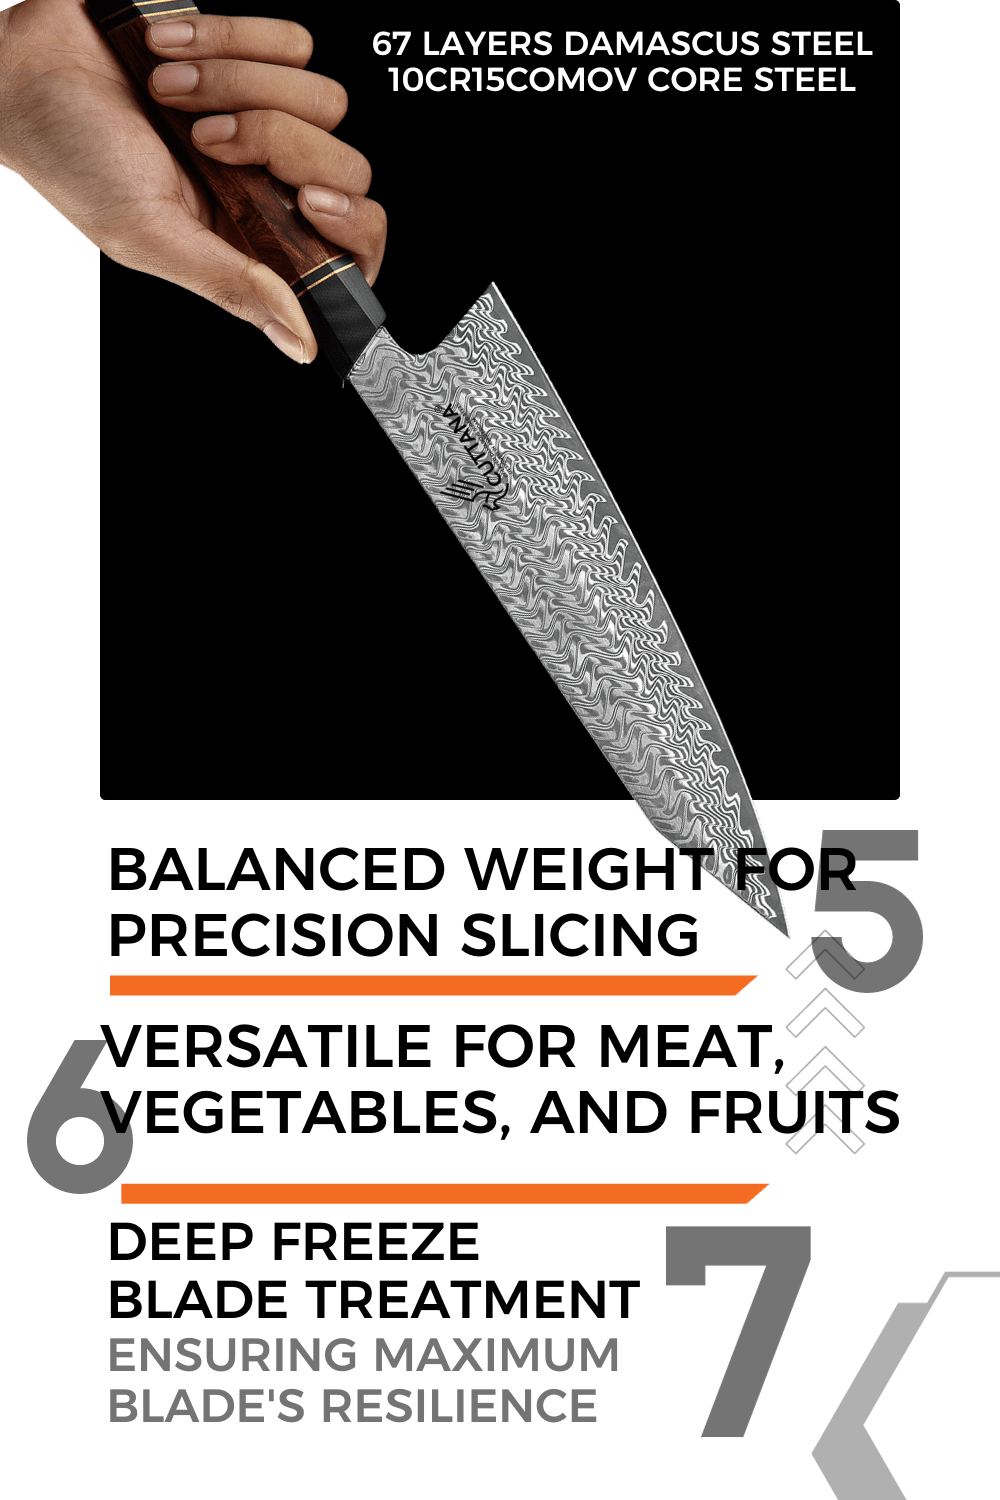 Chef's Knife | Zenith Series | 8 Inches - Cuttana